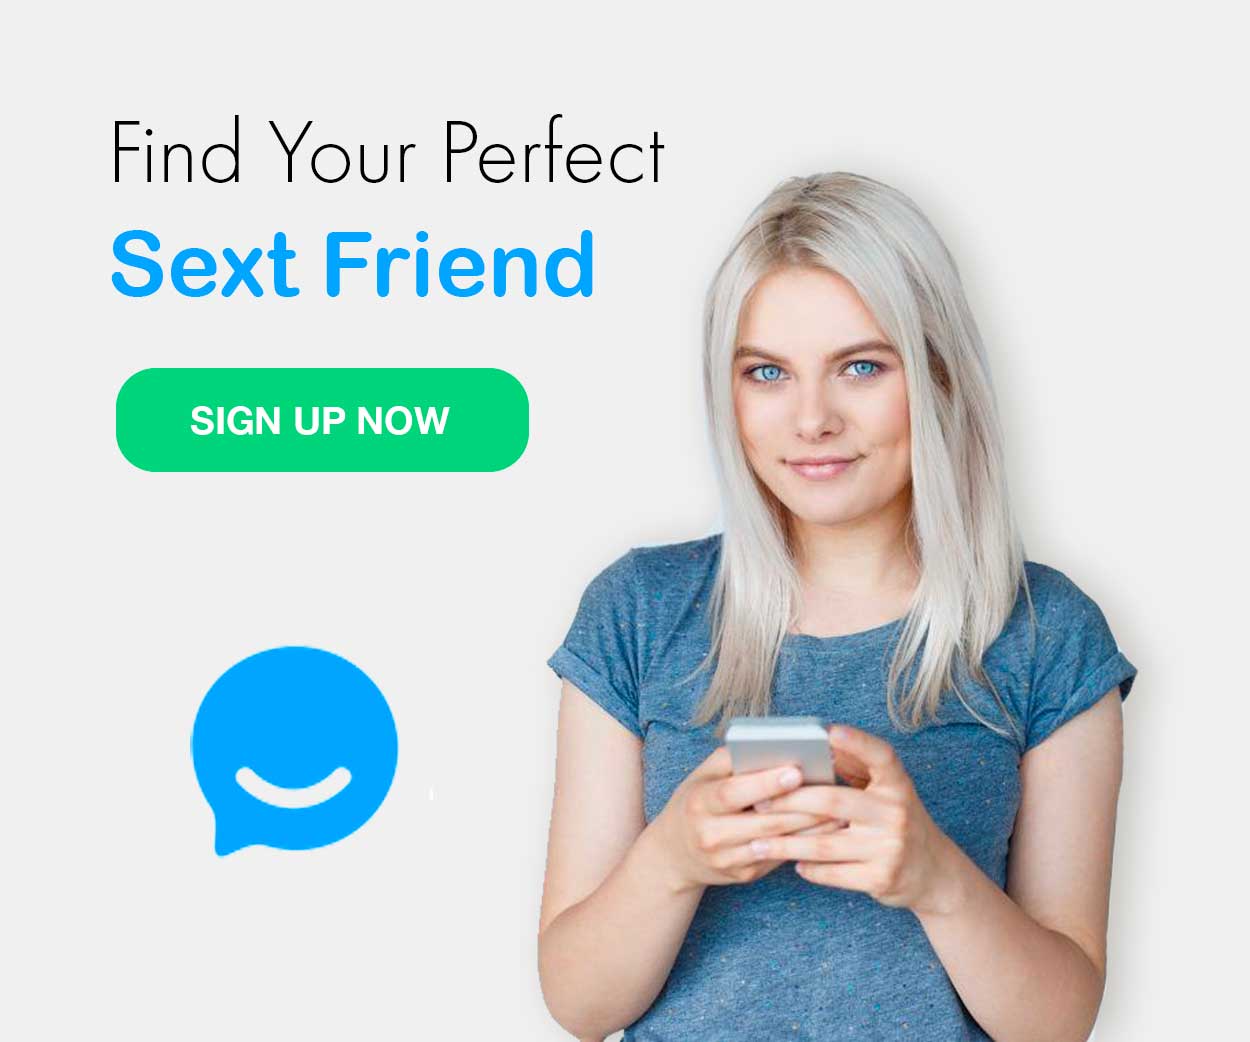 Find a Sext Friend